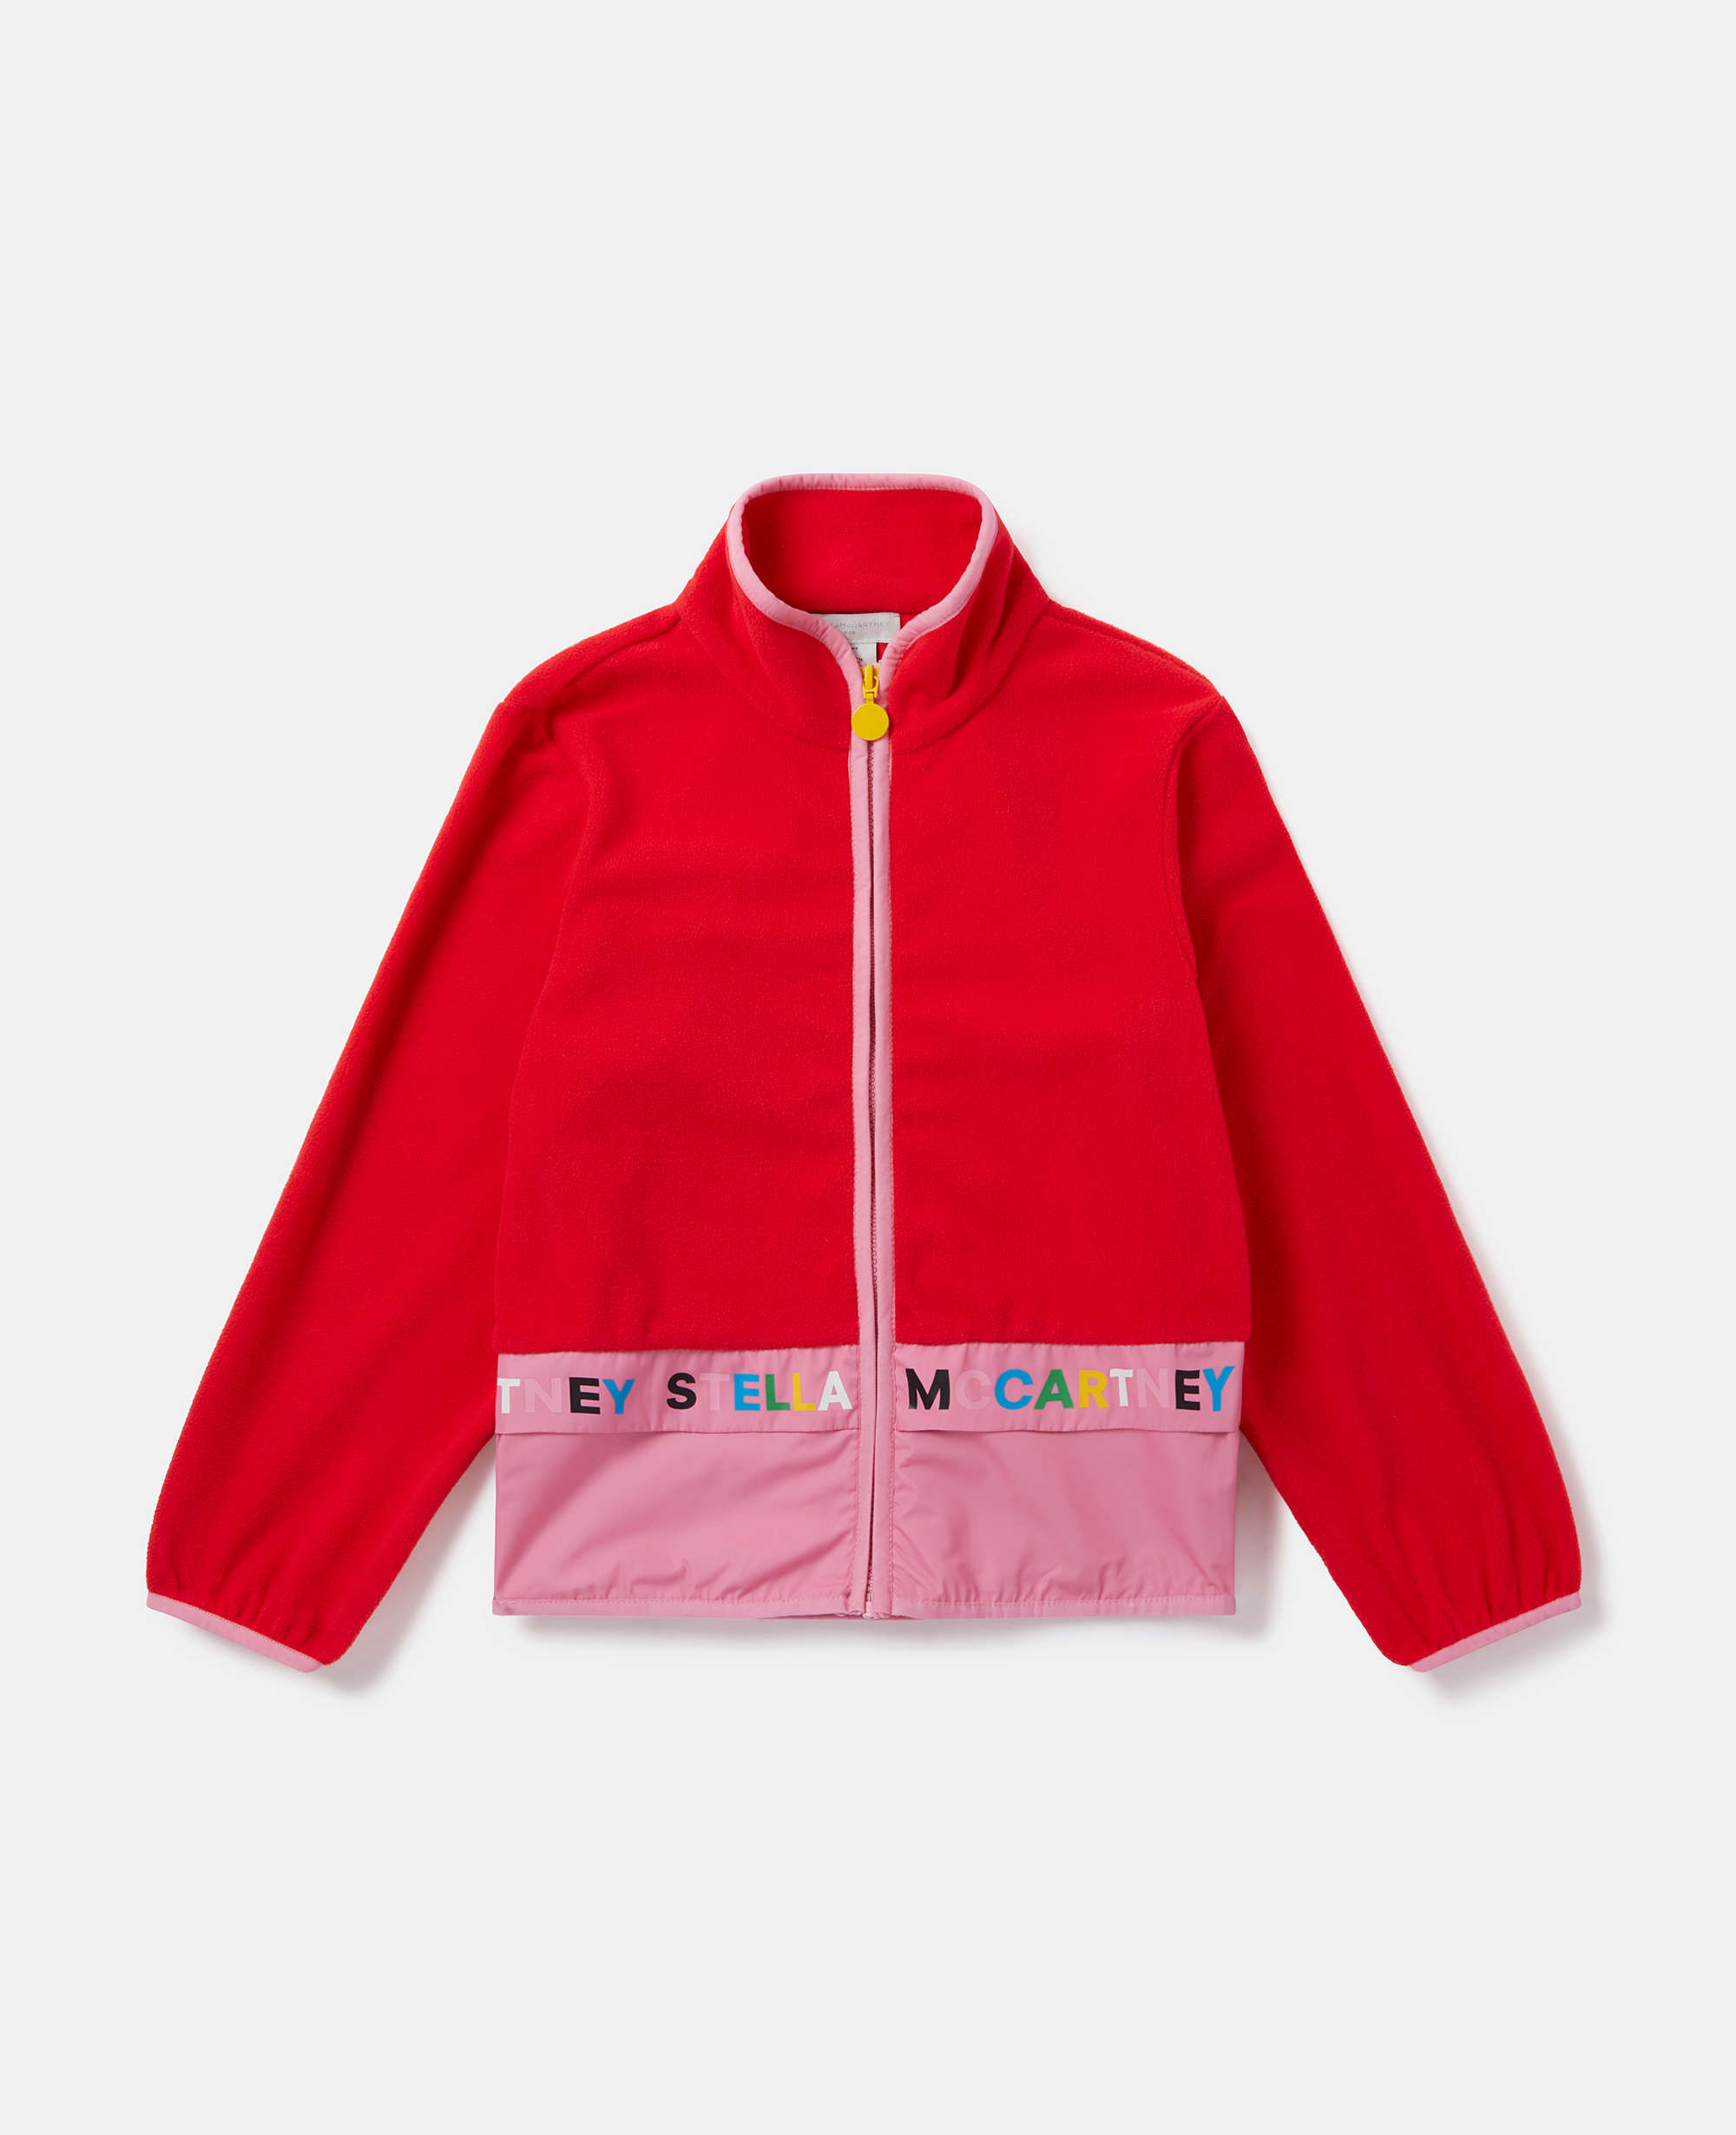 stella mccartney - veste zippee avec bande logo, femme, rouge, taille: 5